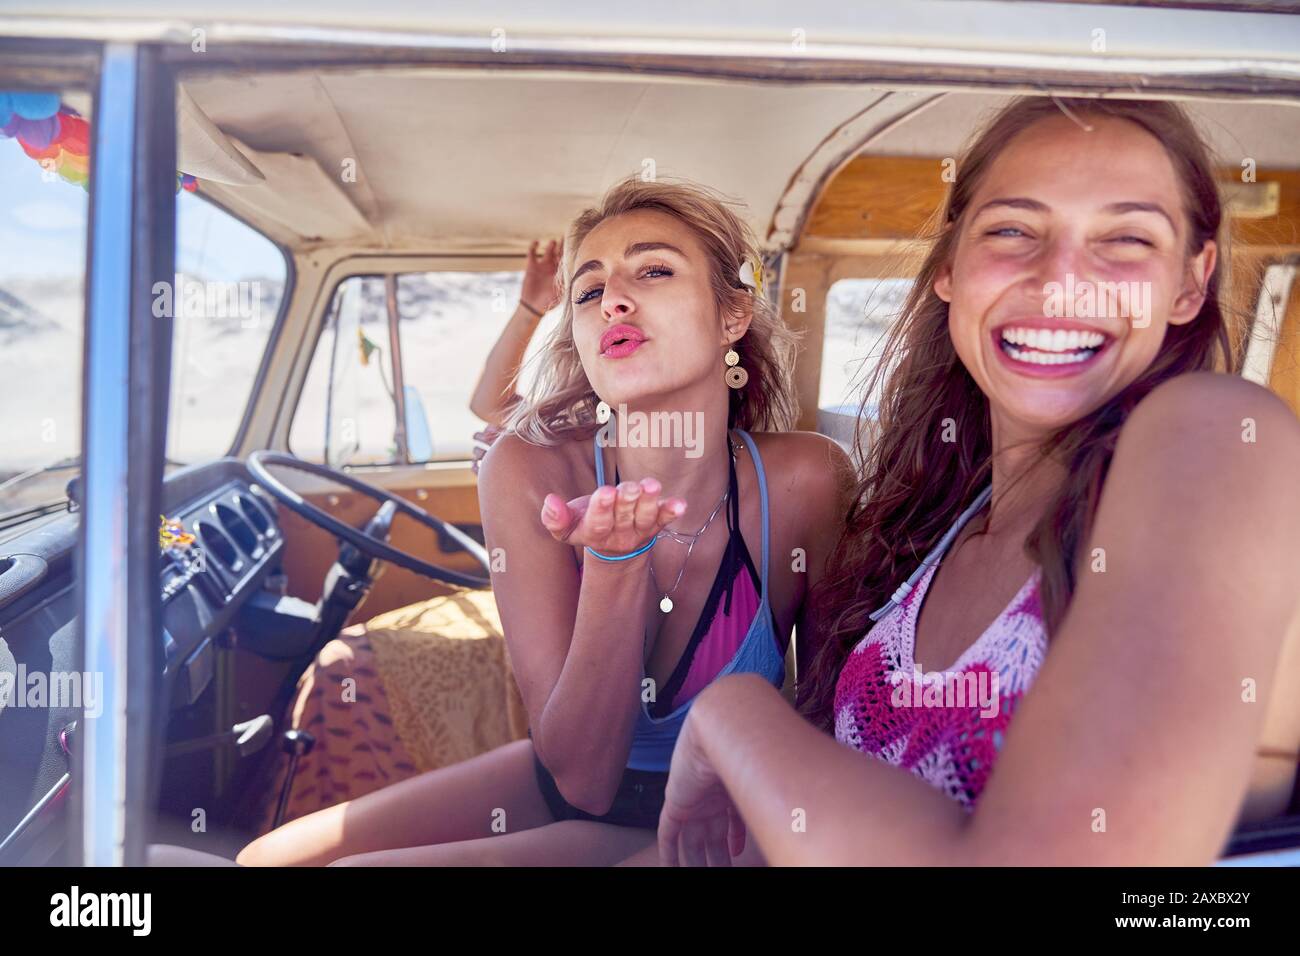 Portrait playful young women friends blowing a kiss inside van Stock Photo